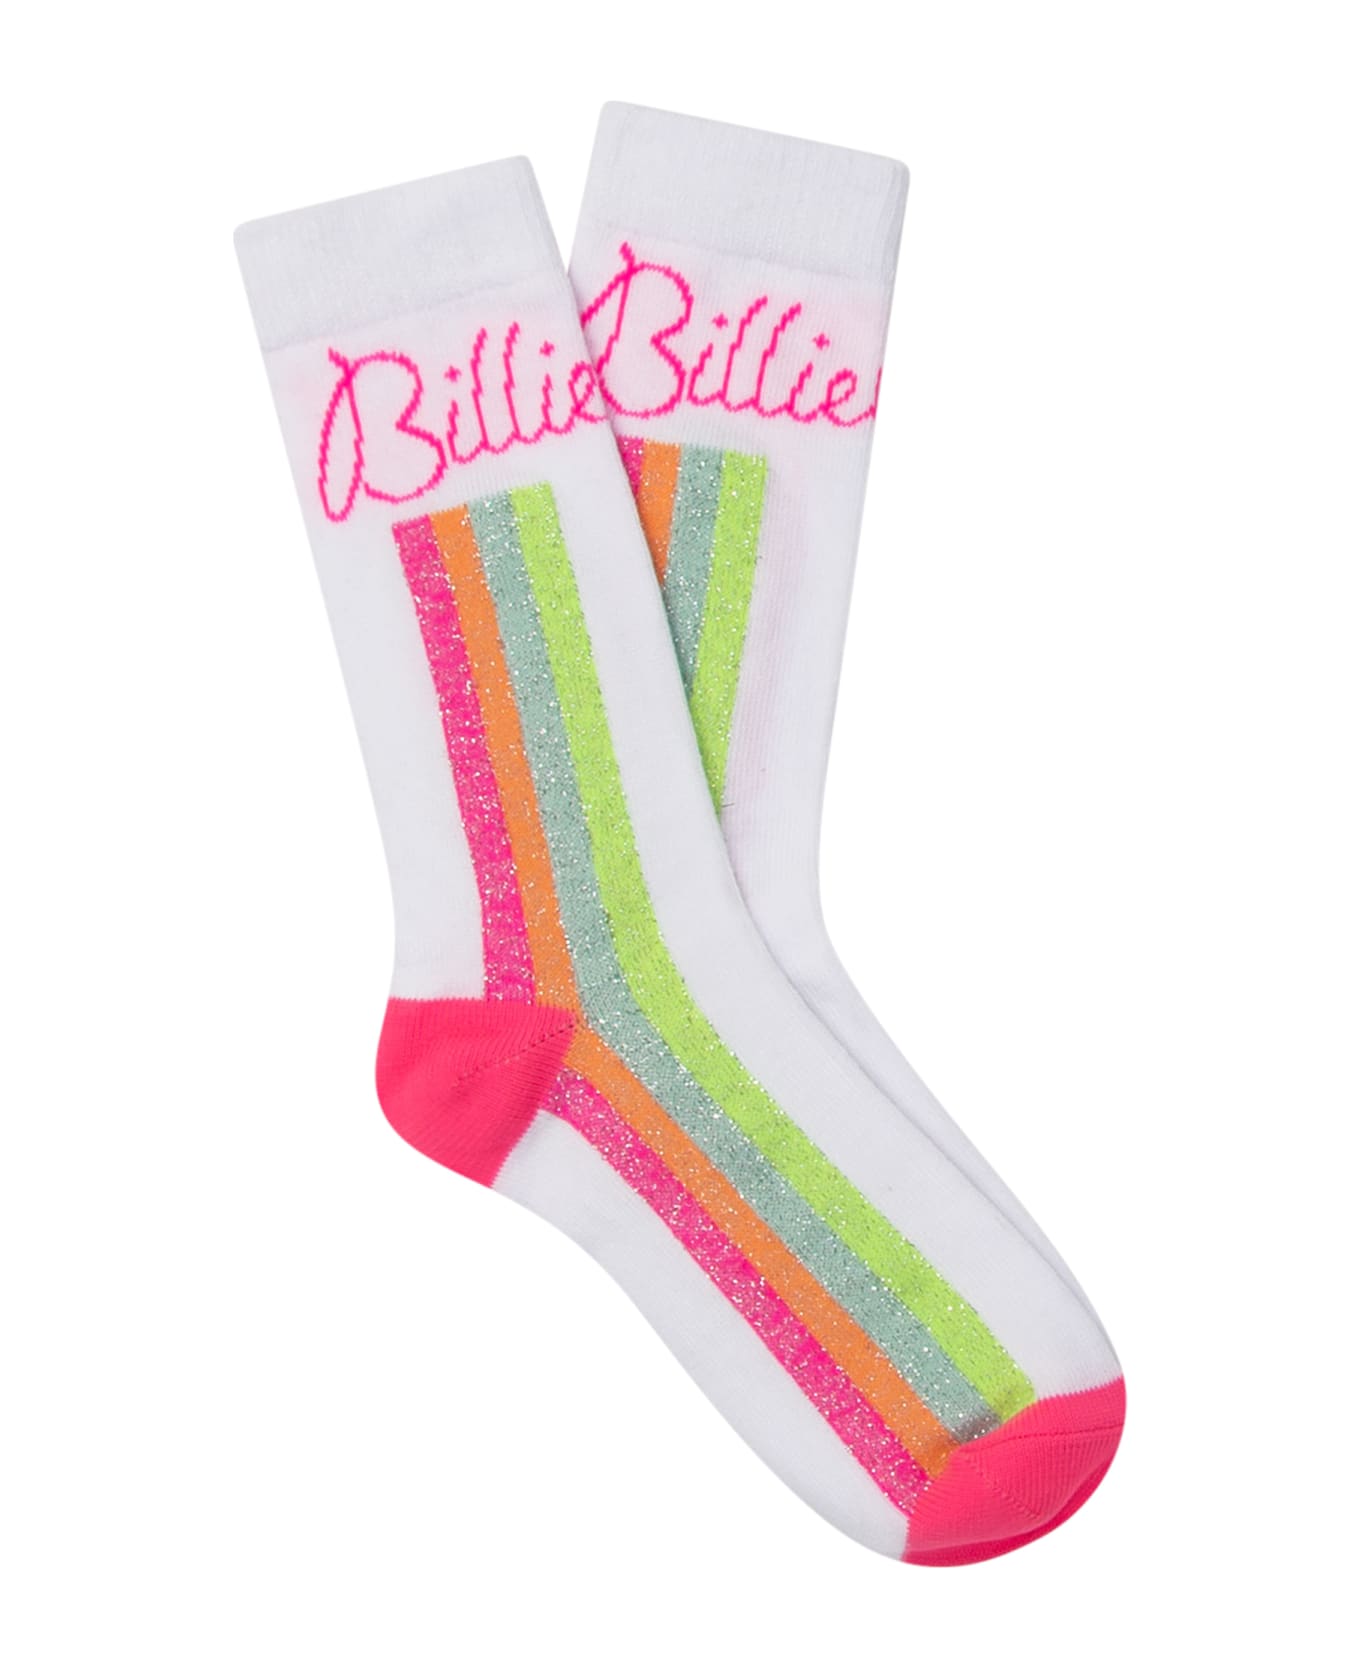 Billieblush Socks With Print - White